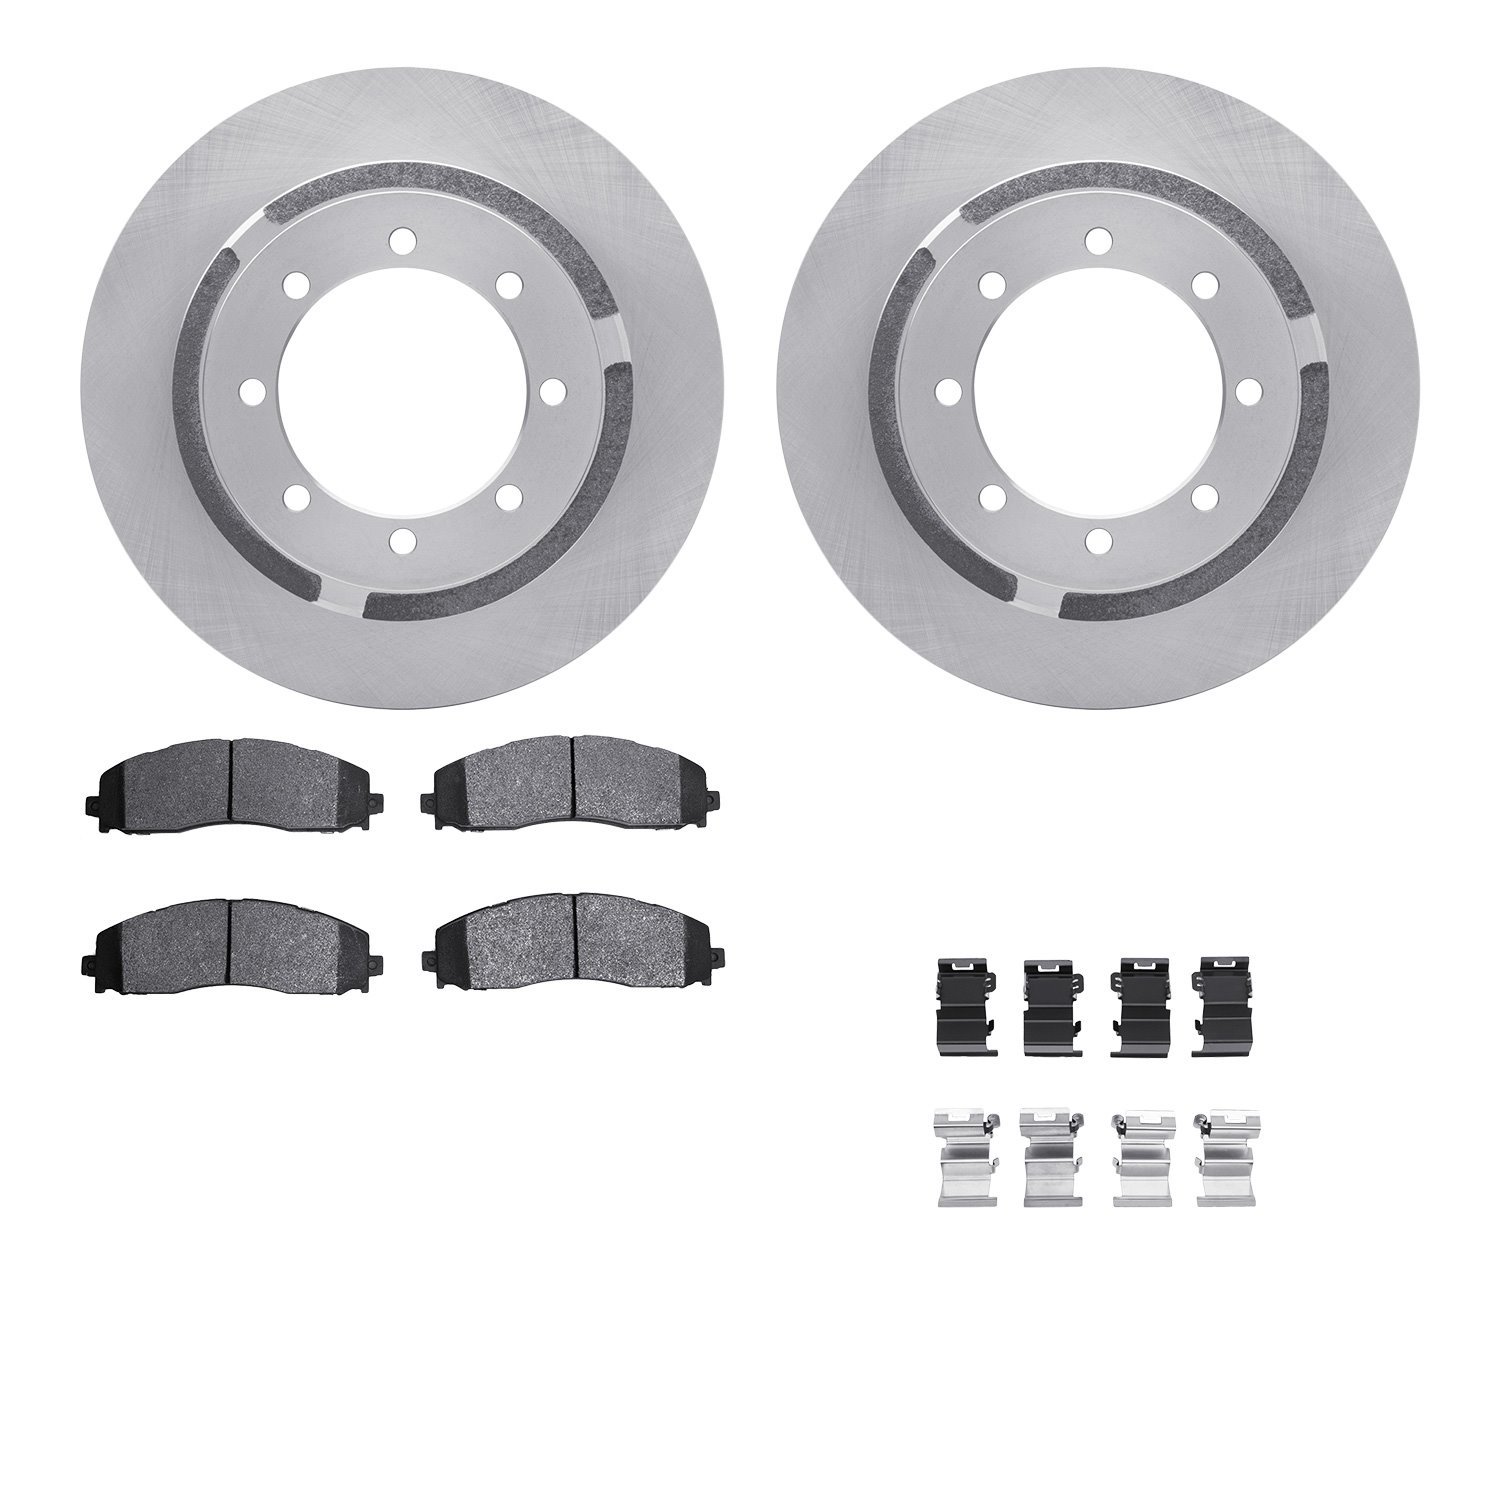 6212-99708 Brake Rotors w/Heavy-Duty Brake Pads Kit & Hardware, Fits Select Ford/Lincoln/Mercury/Mazda, Position: Rear